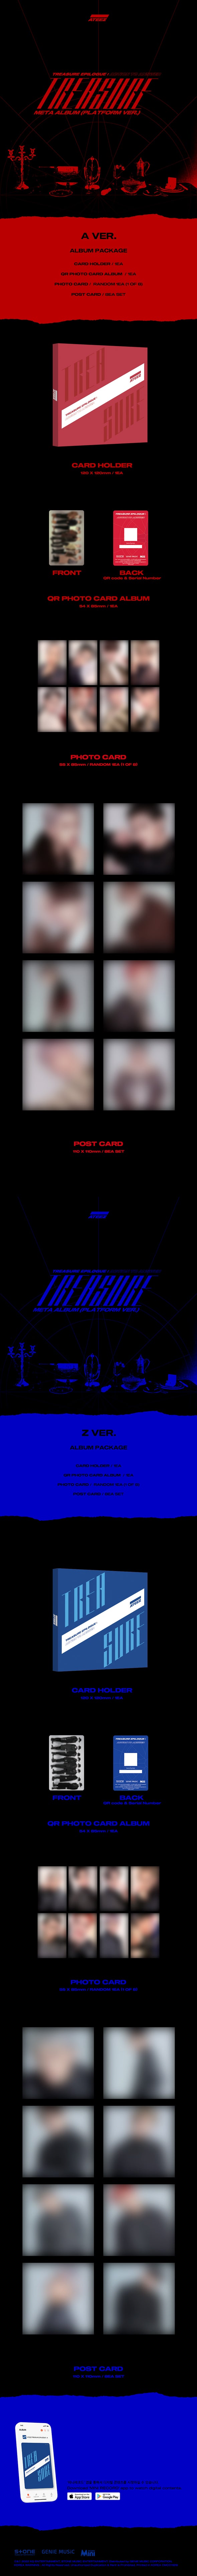 ATEEZ [TREASURE EPILOGUE : Action To Answer] META ALBUM - Platform - Kpop Music 사랑해요